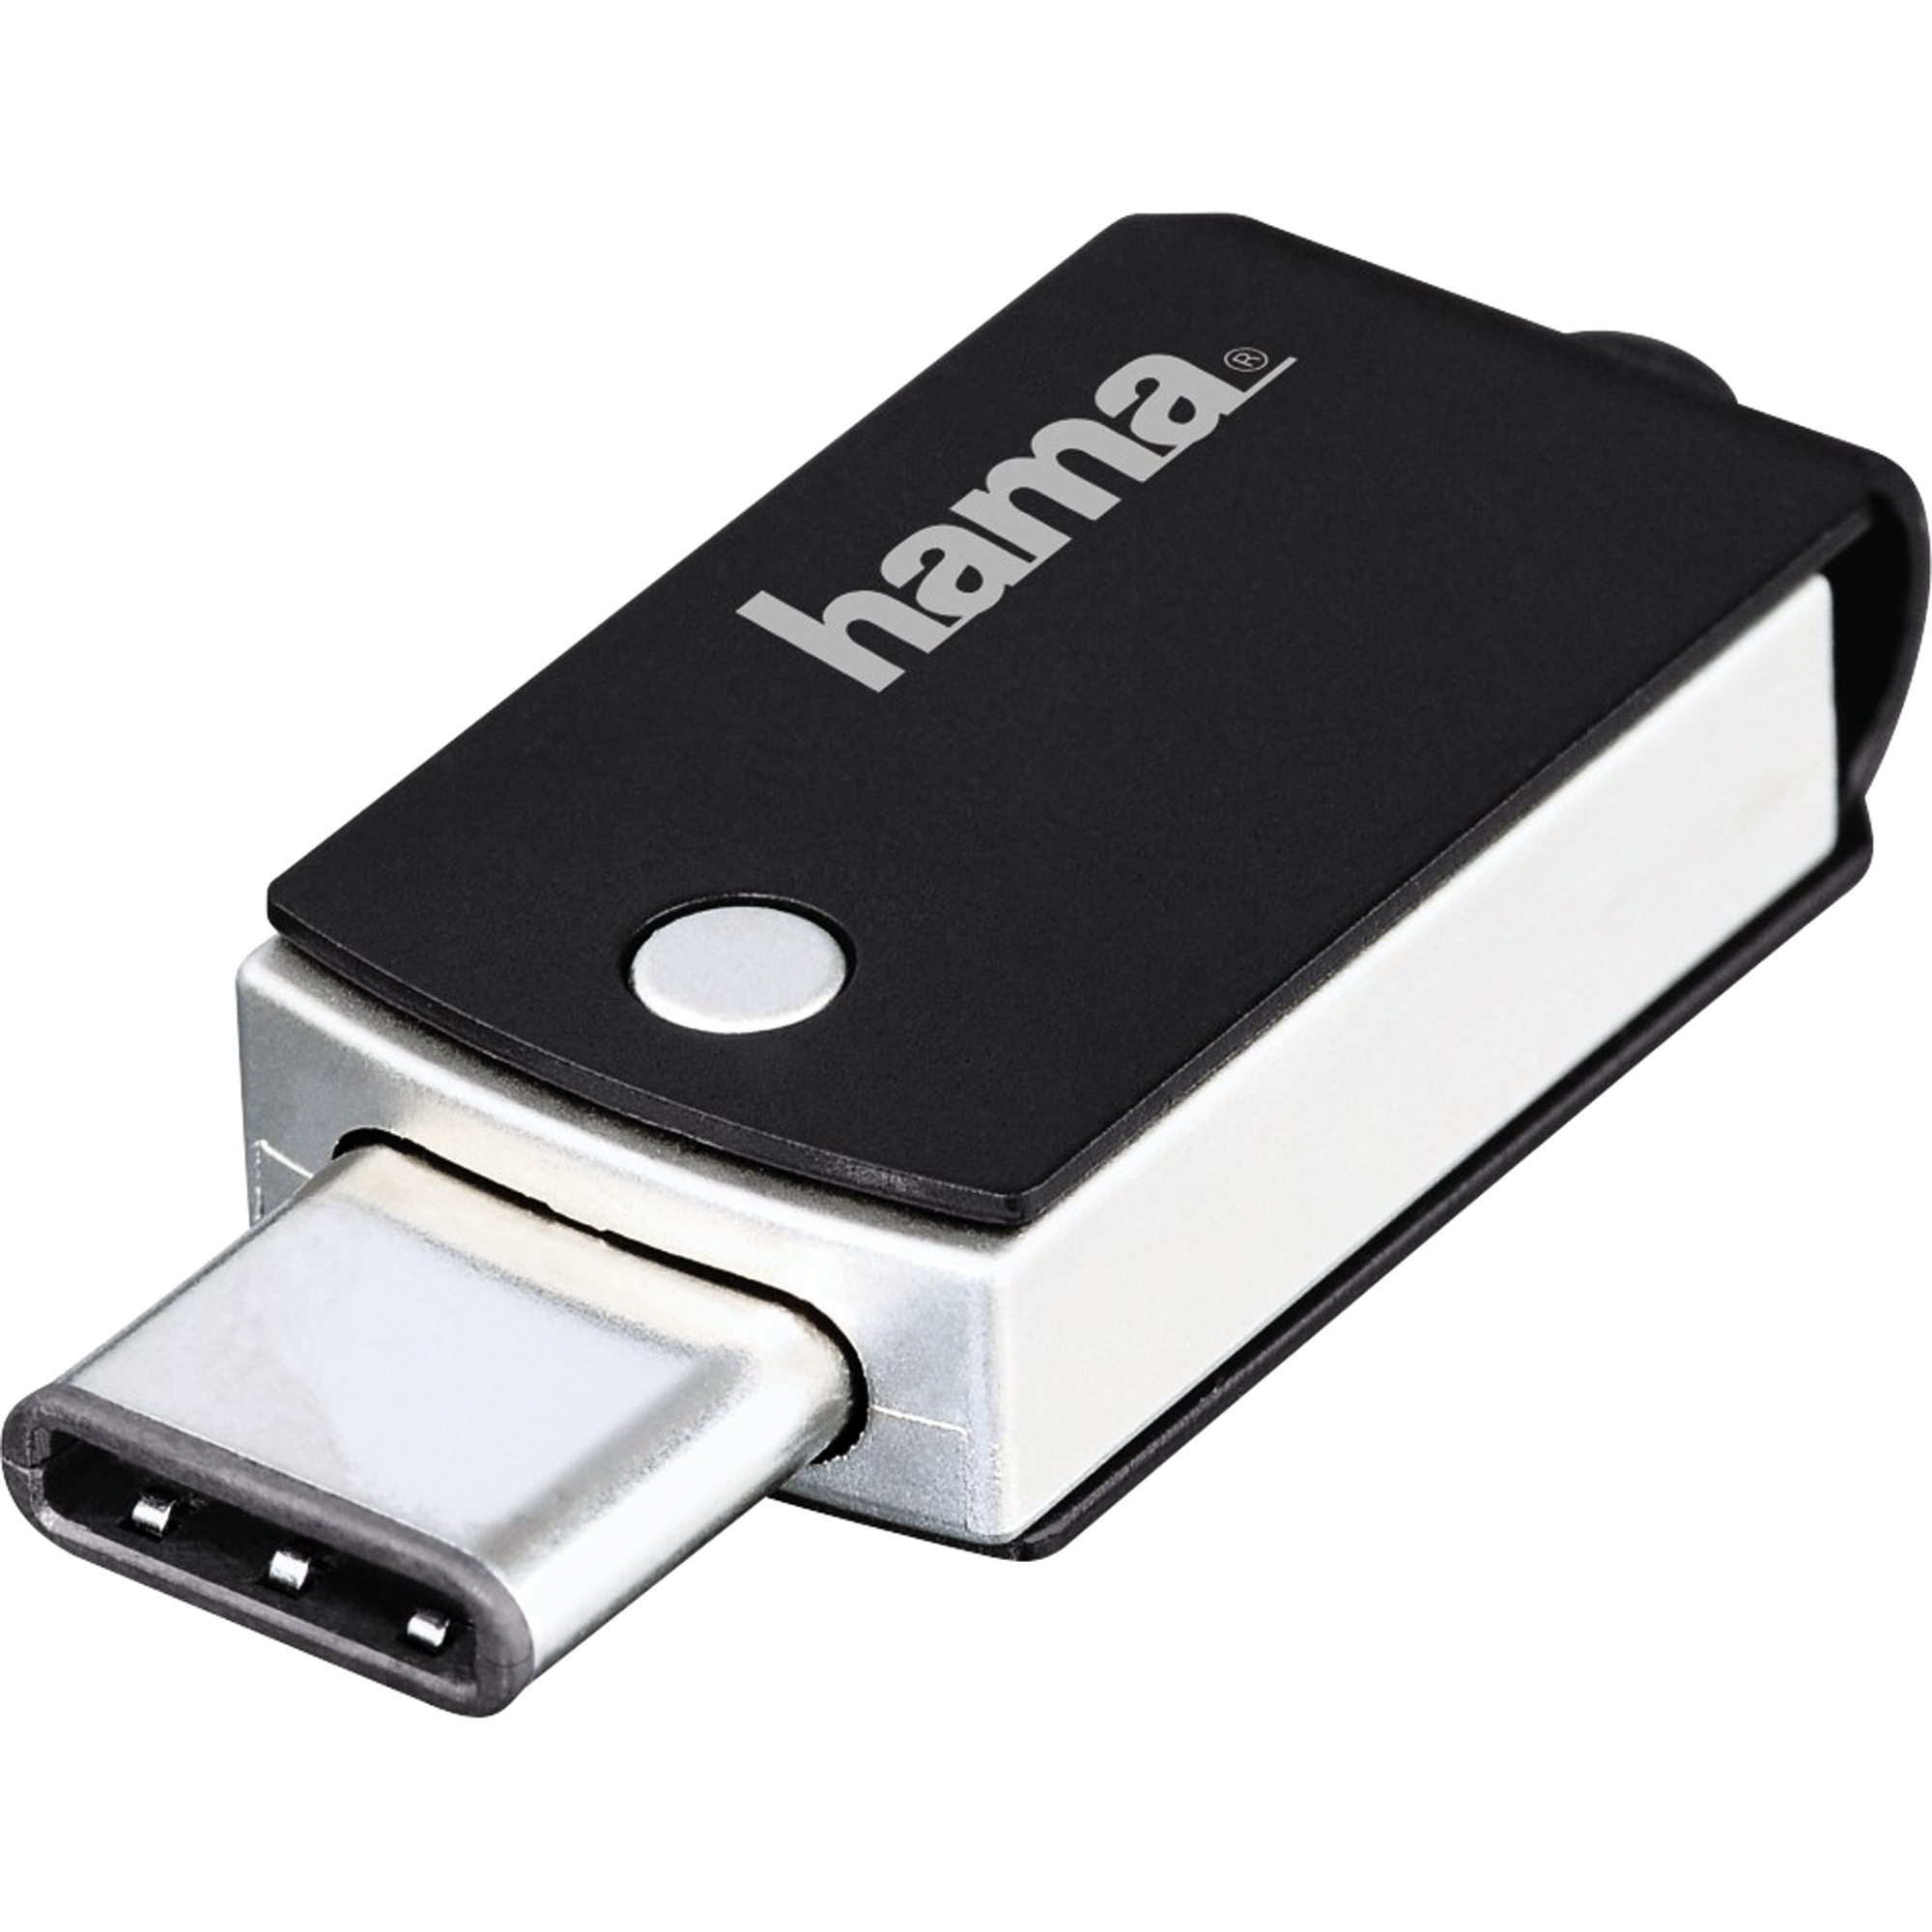 Hama USB Stick C-Turn 32 Gbyte